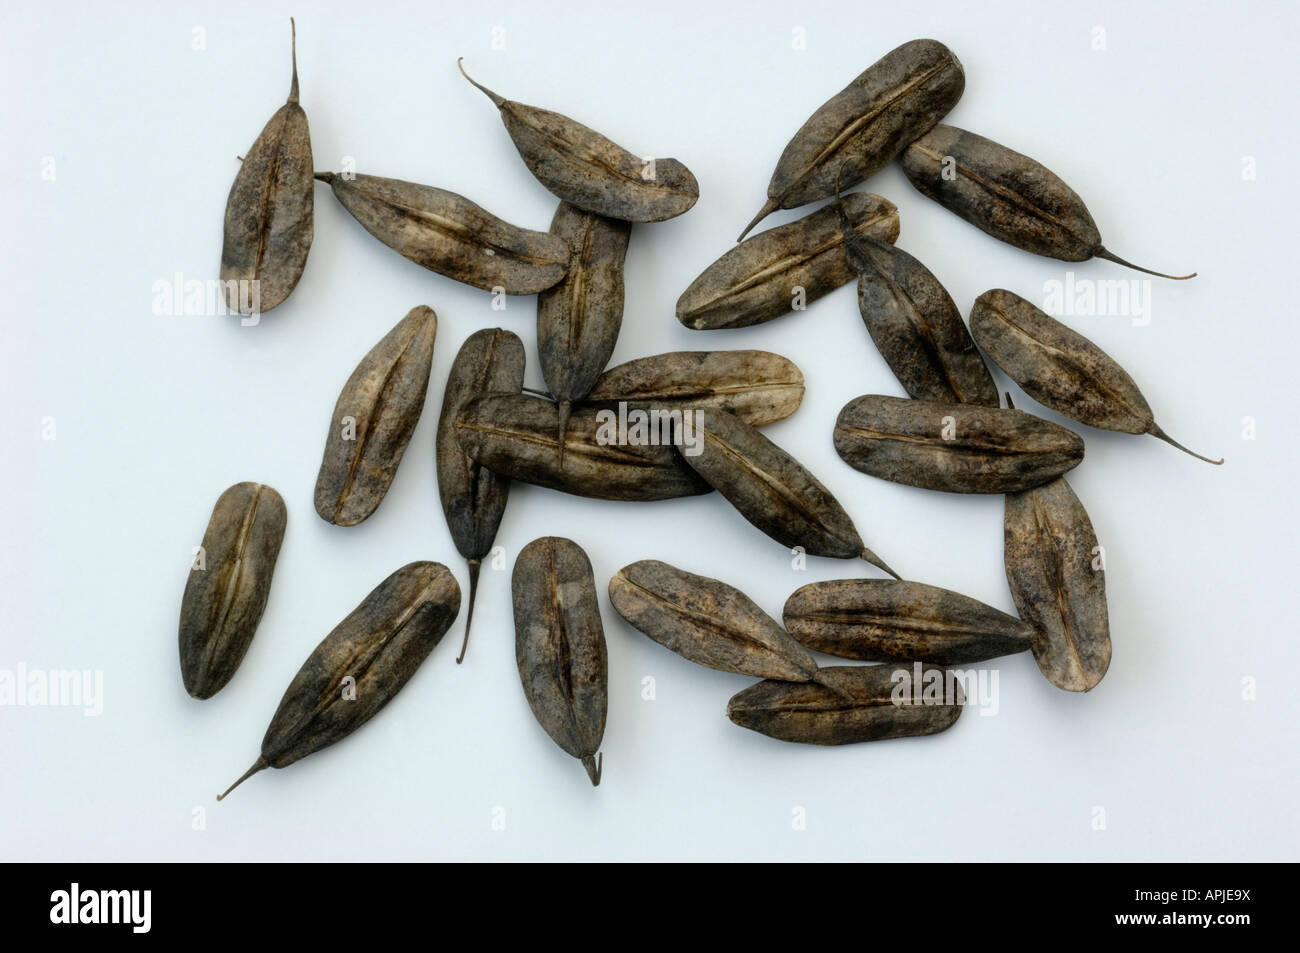 Common Dyers Weed, Dyers Woad, Woad, Glastum (Isatis tinctoria), seeds, studio picture Stock Photo